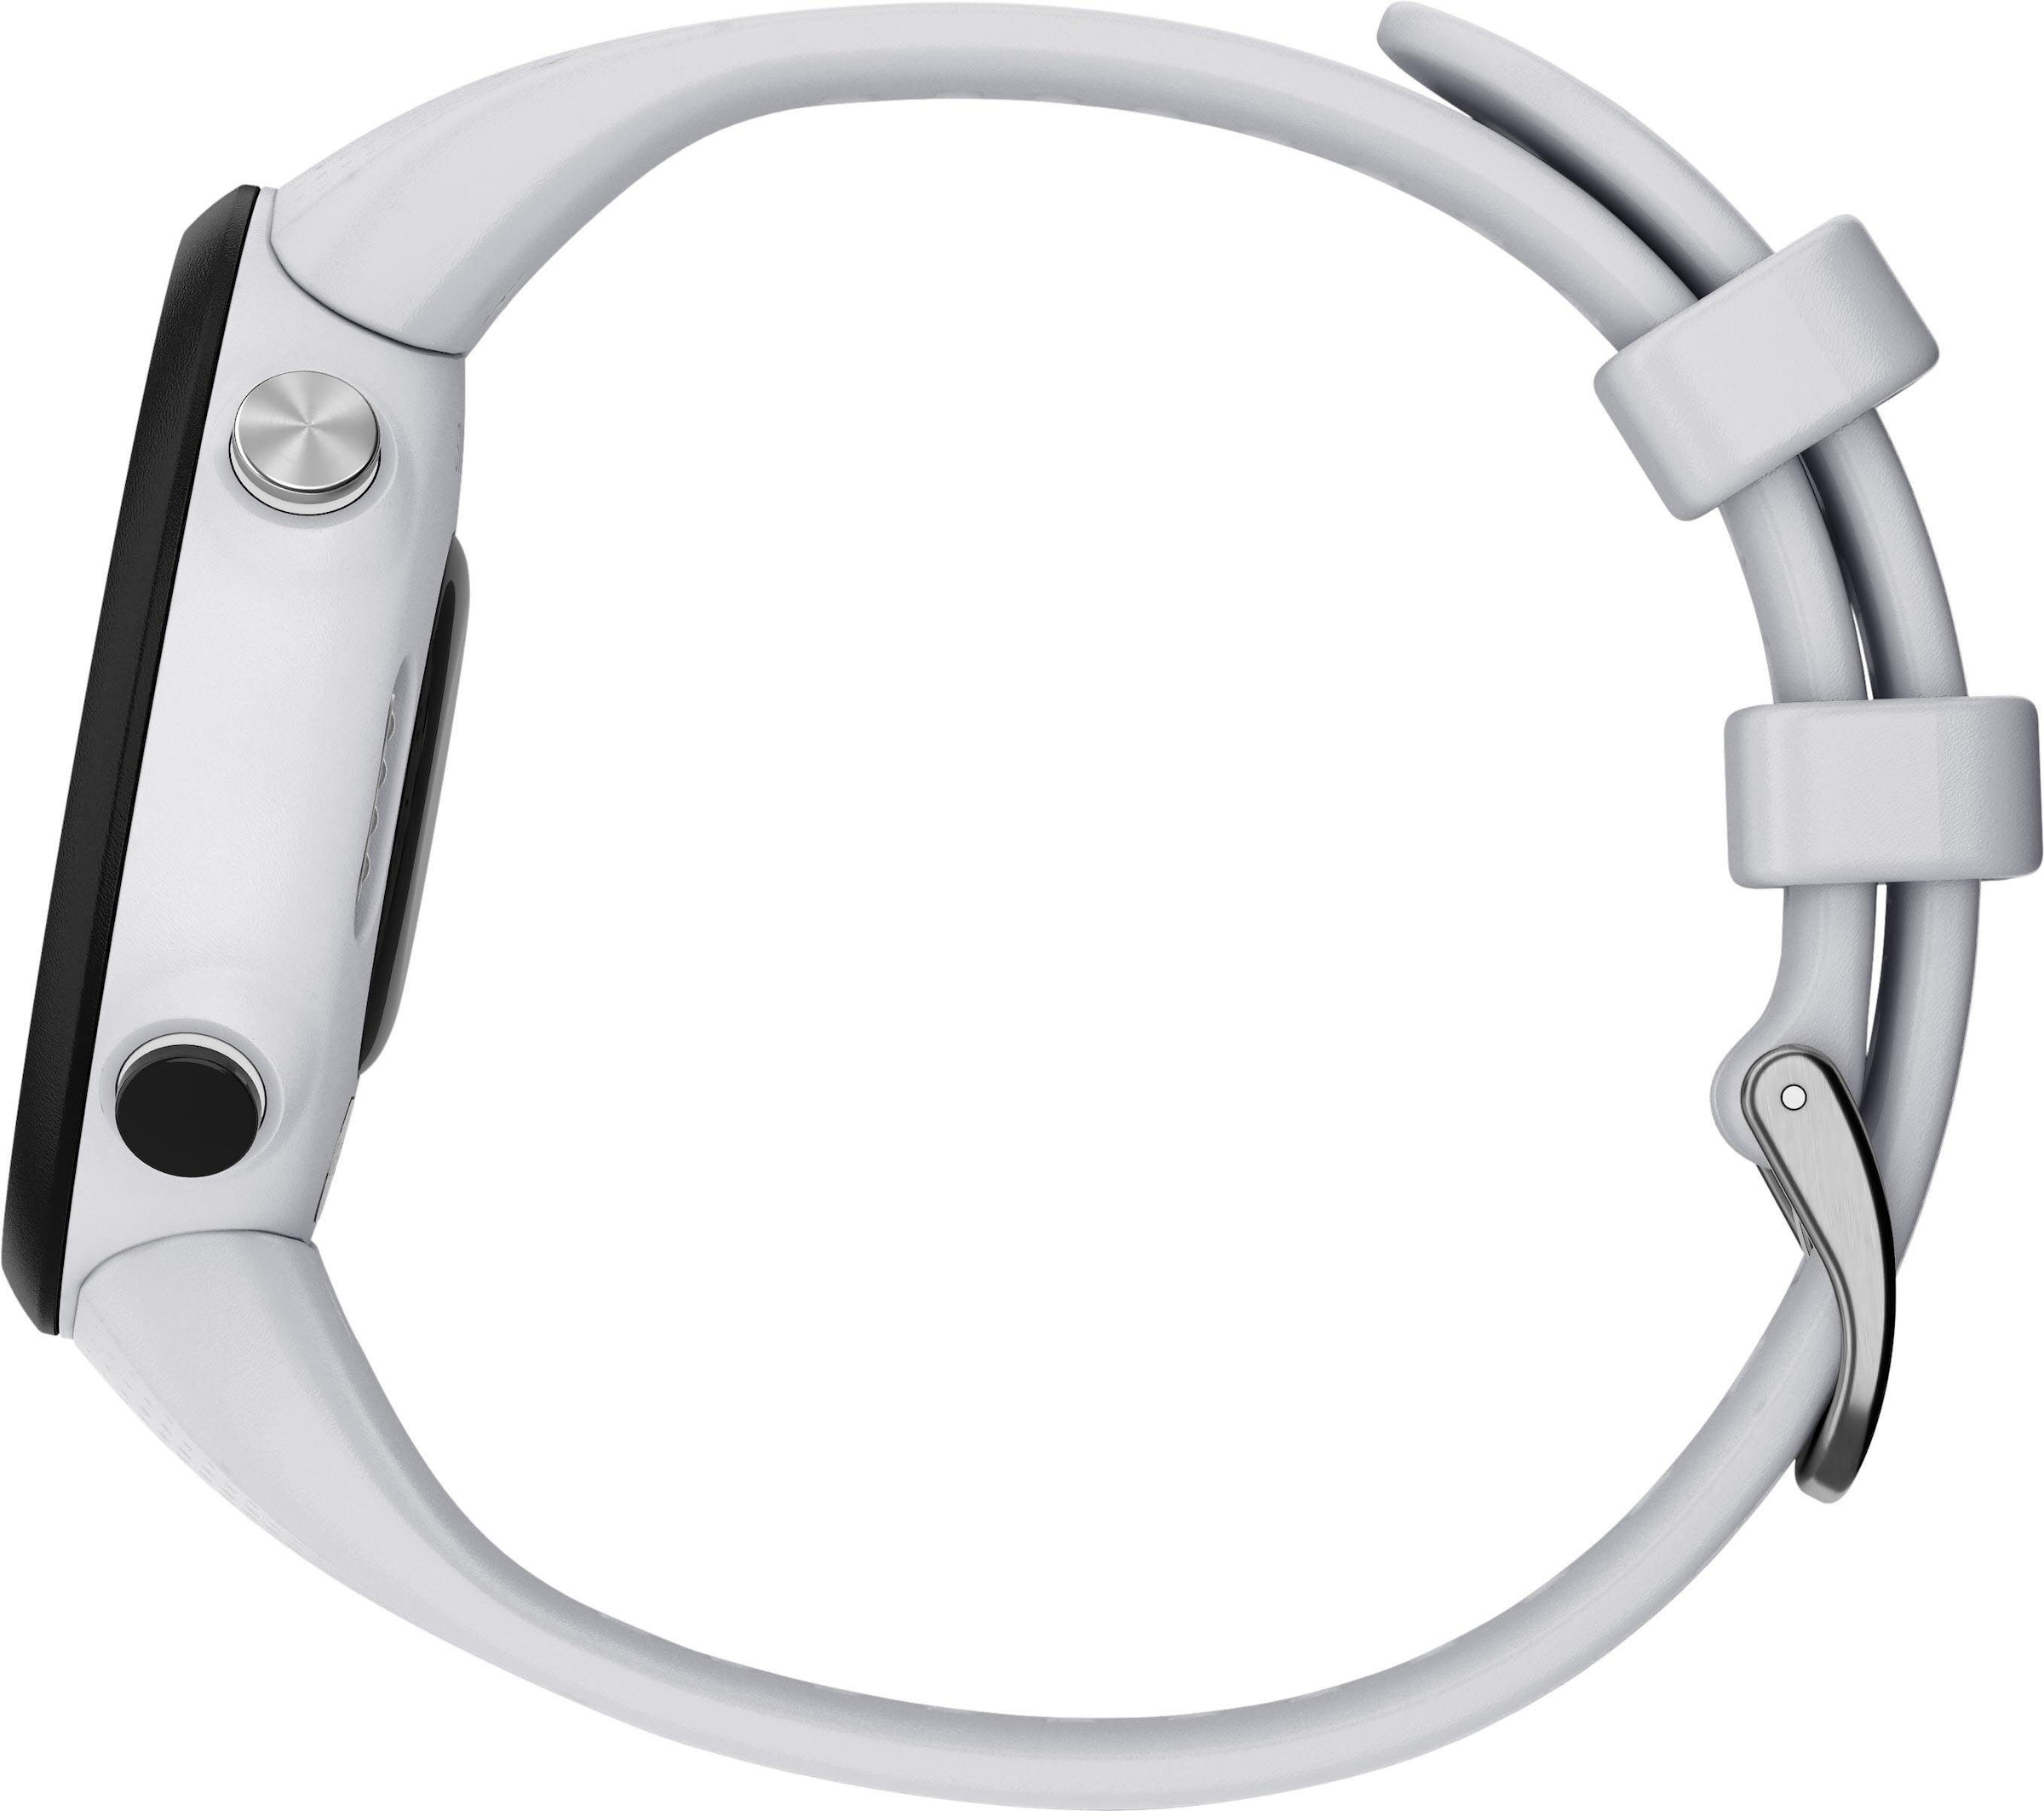 Garmin Smartwatch »Swim2 mit Silikon-Armband 20 mm« ➥ 3 Jahre XXL Garantie  | UNIVERSAL